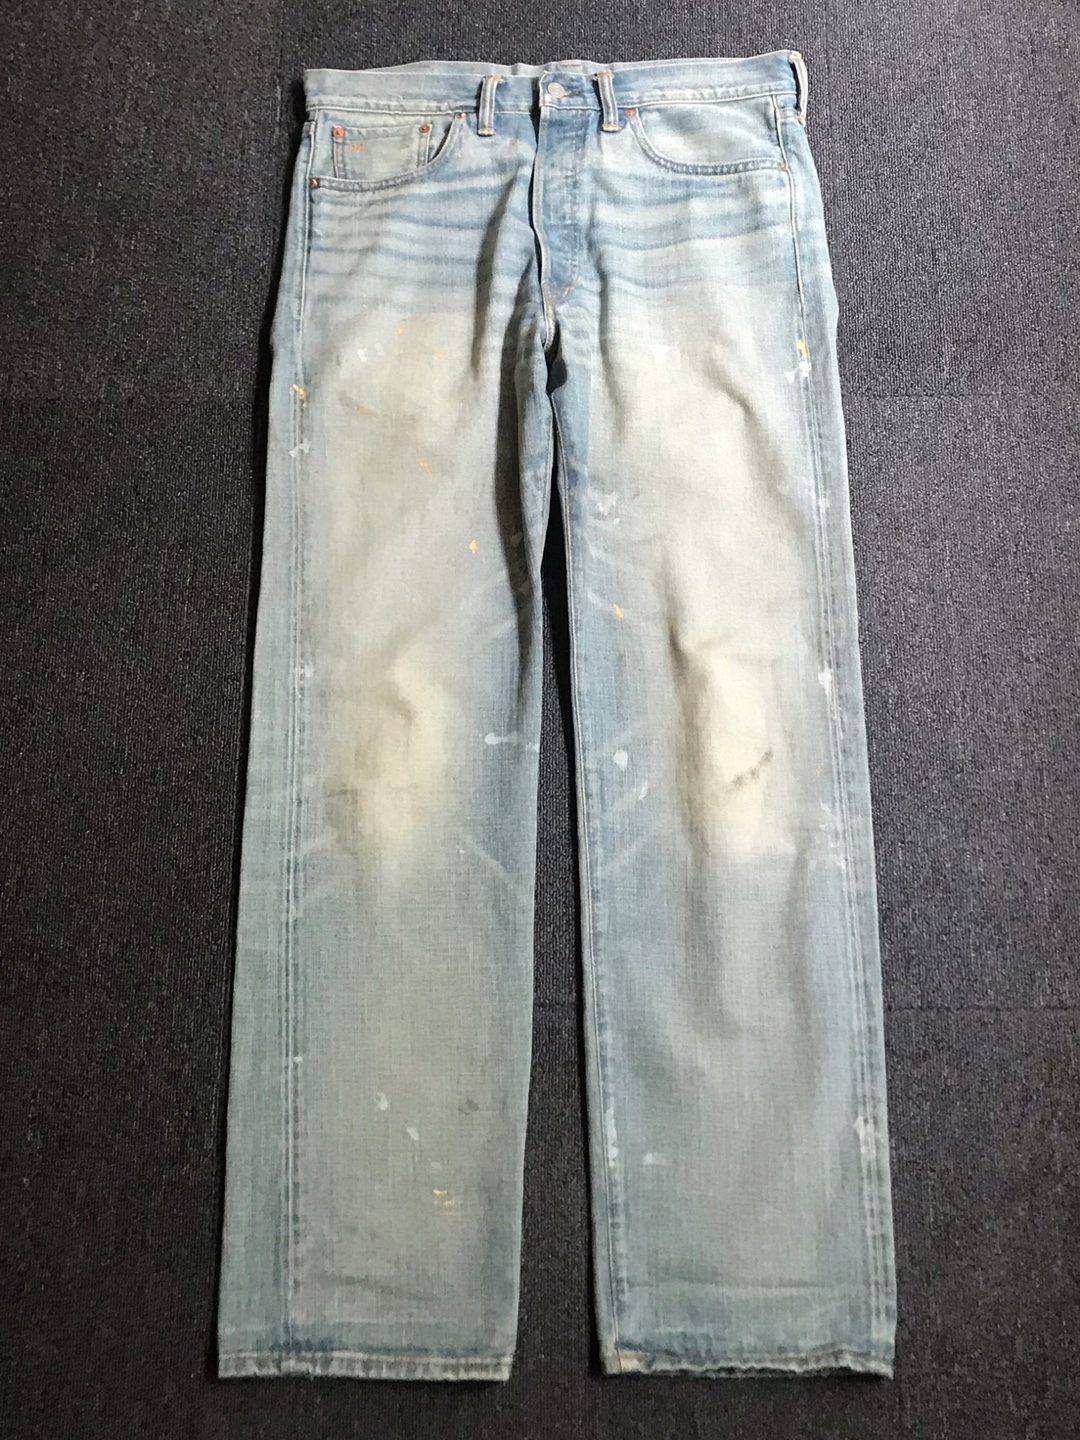 RRL japan woven selvedge straight leg jeans USA made (34/32 size, ~35인치 추천)